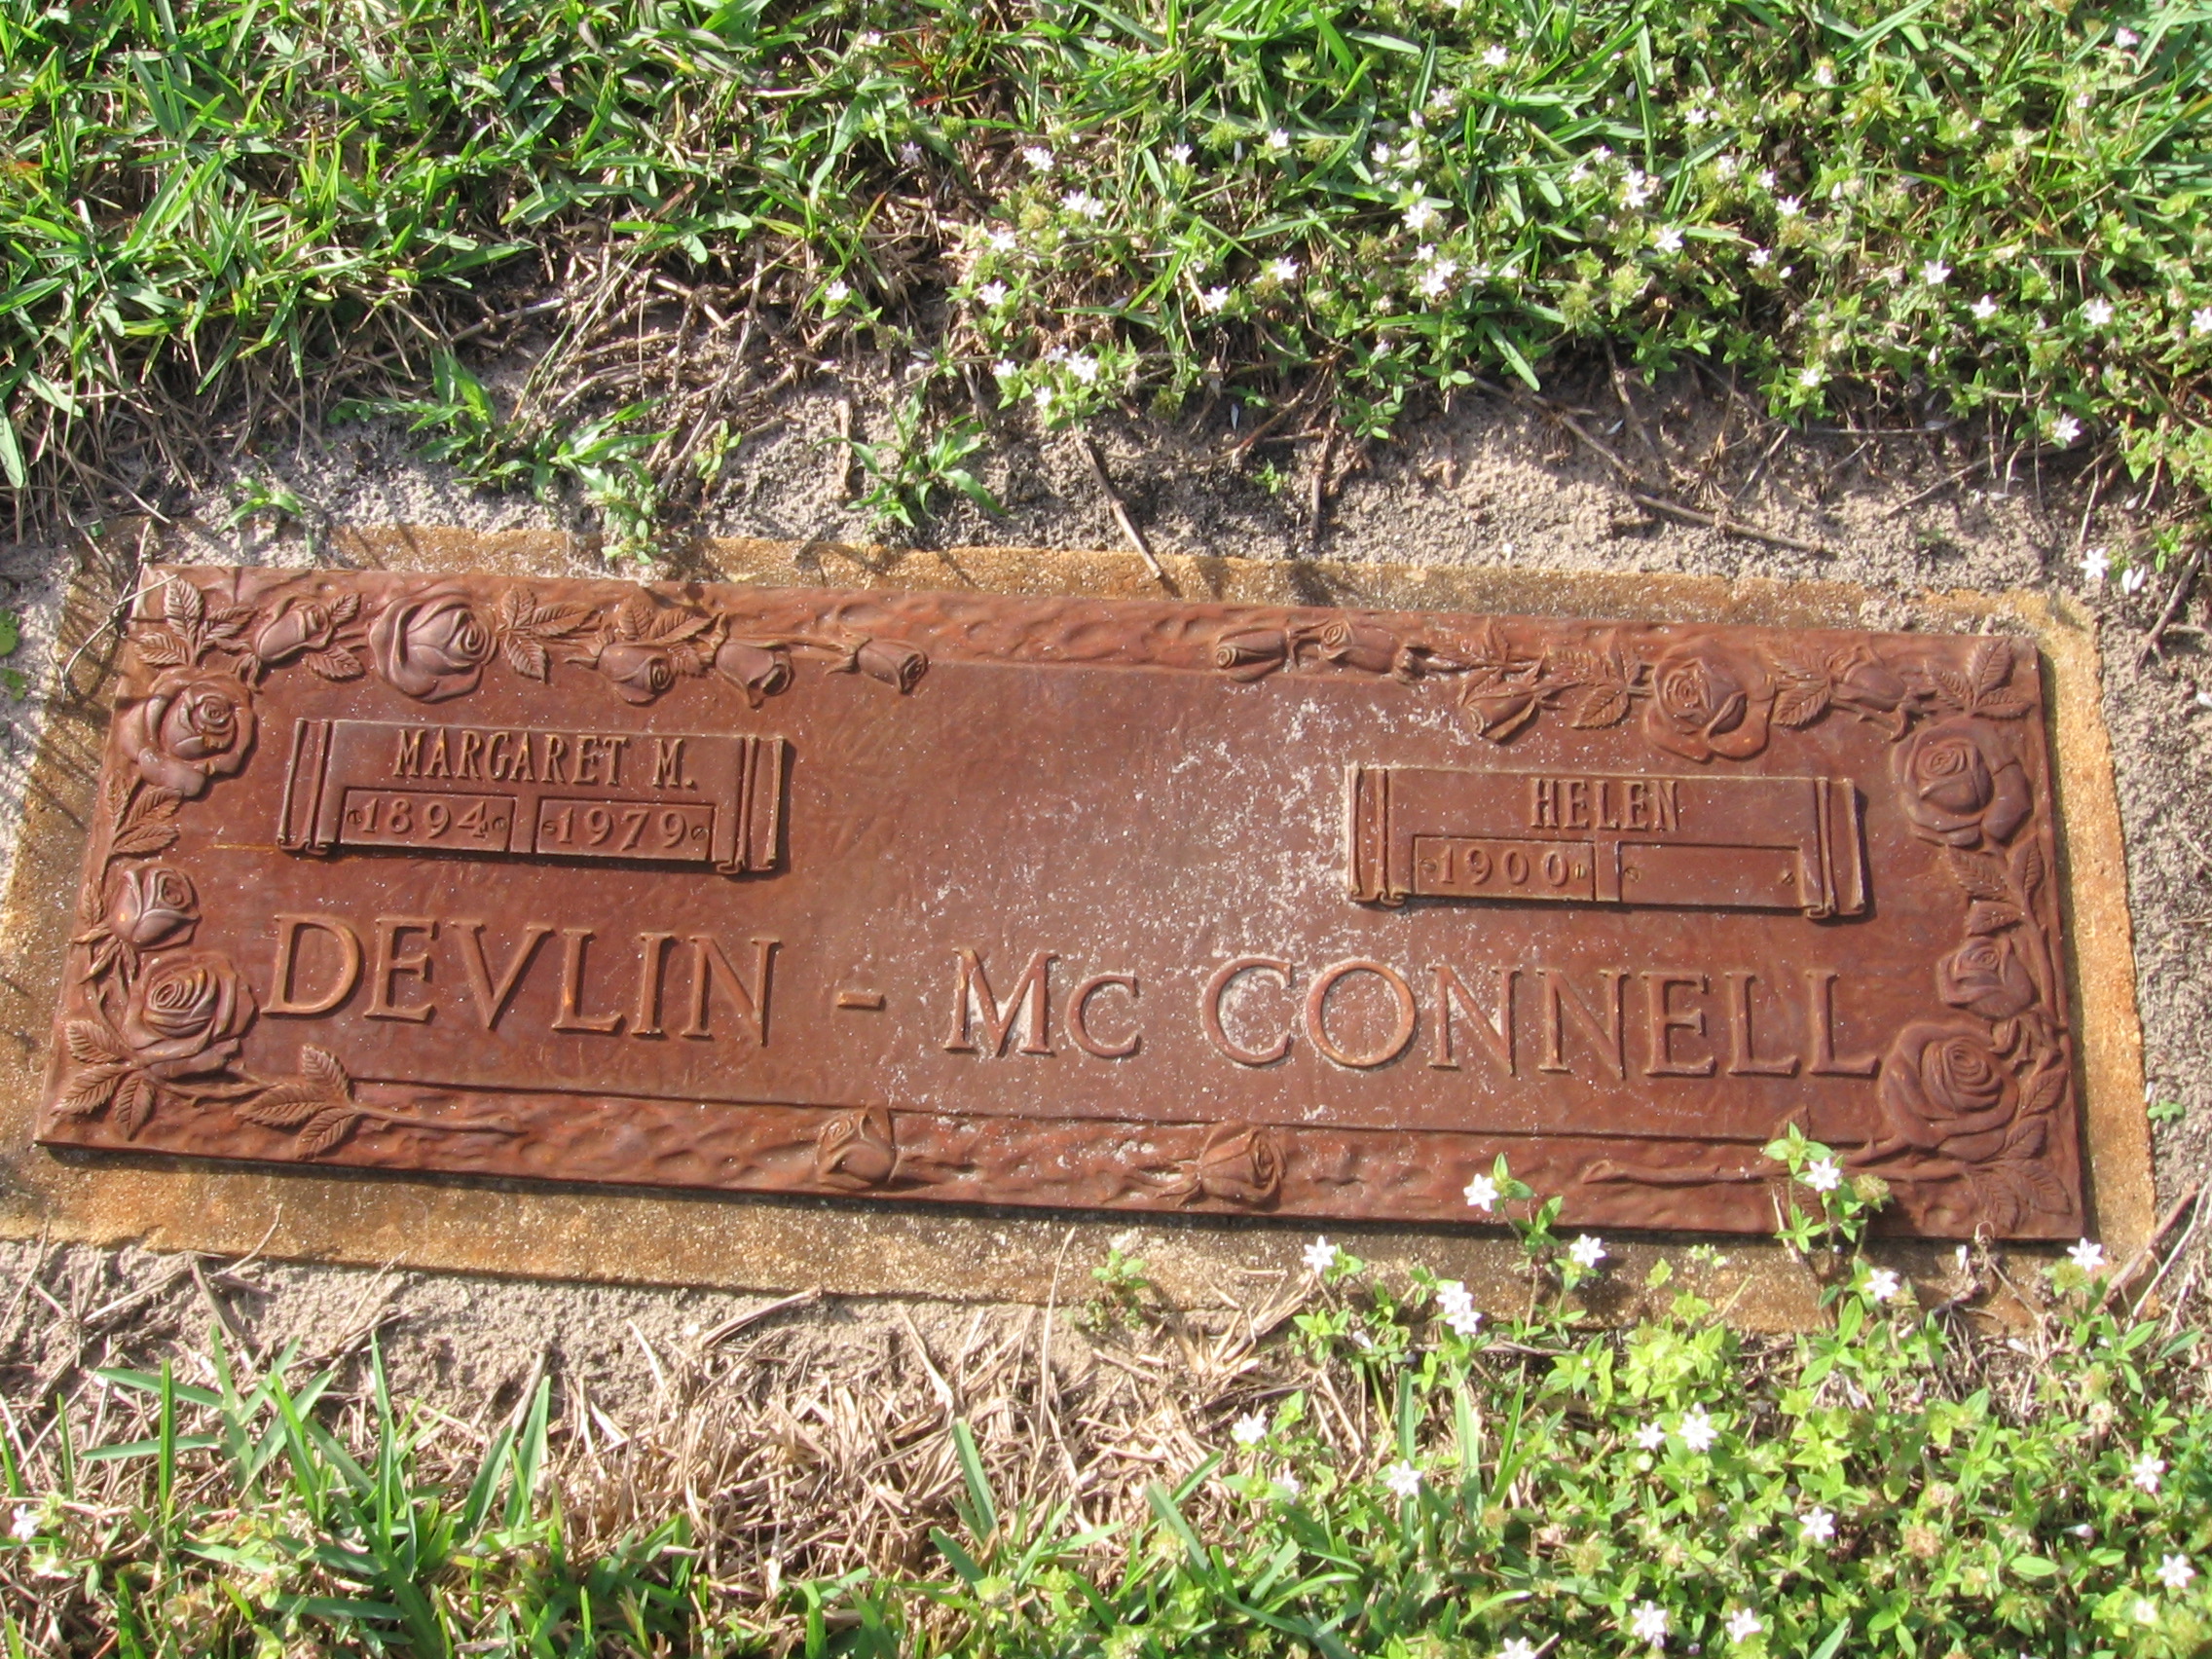 Margaret M Devlin - Mc Connell